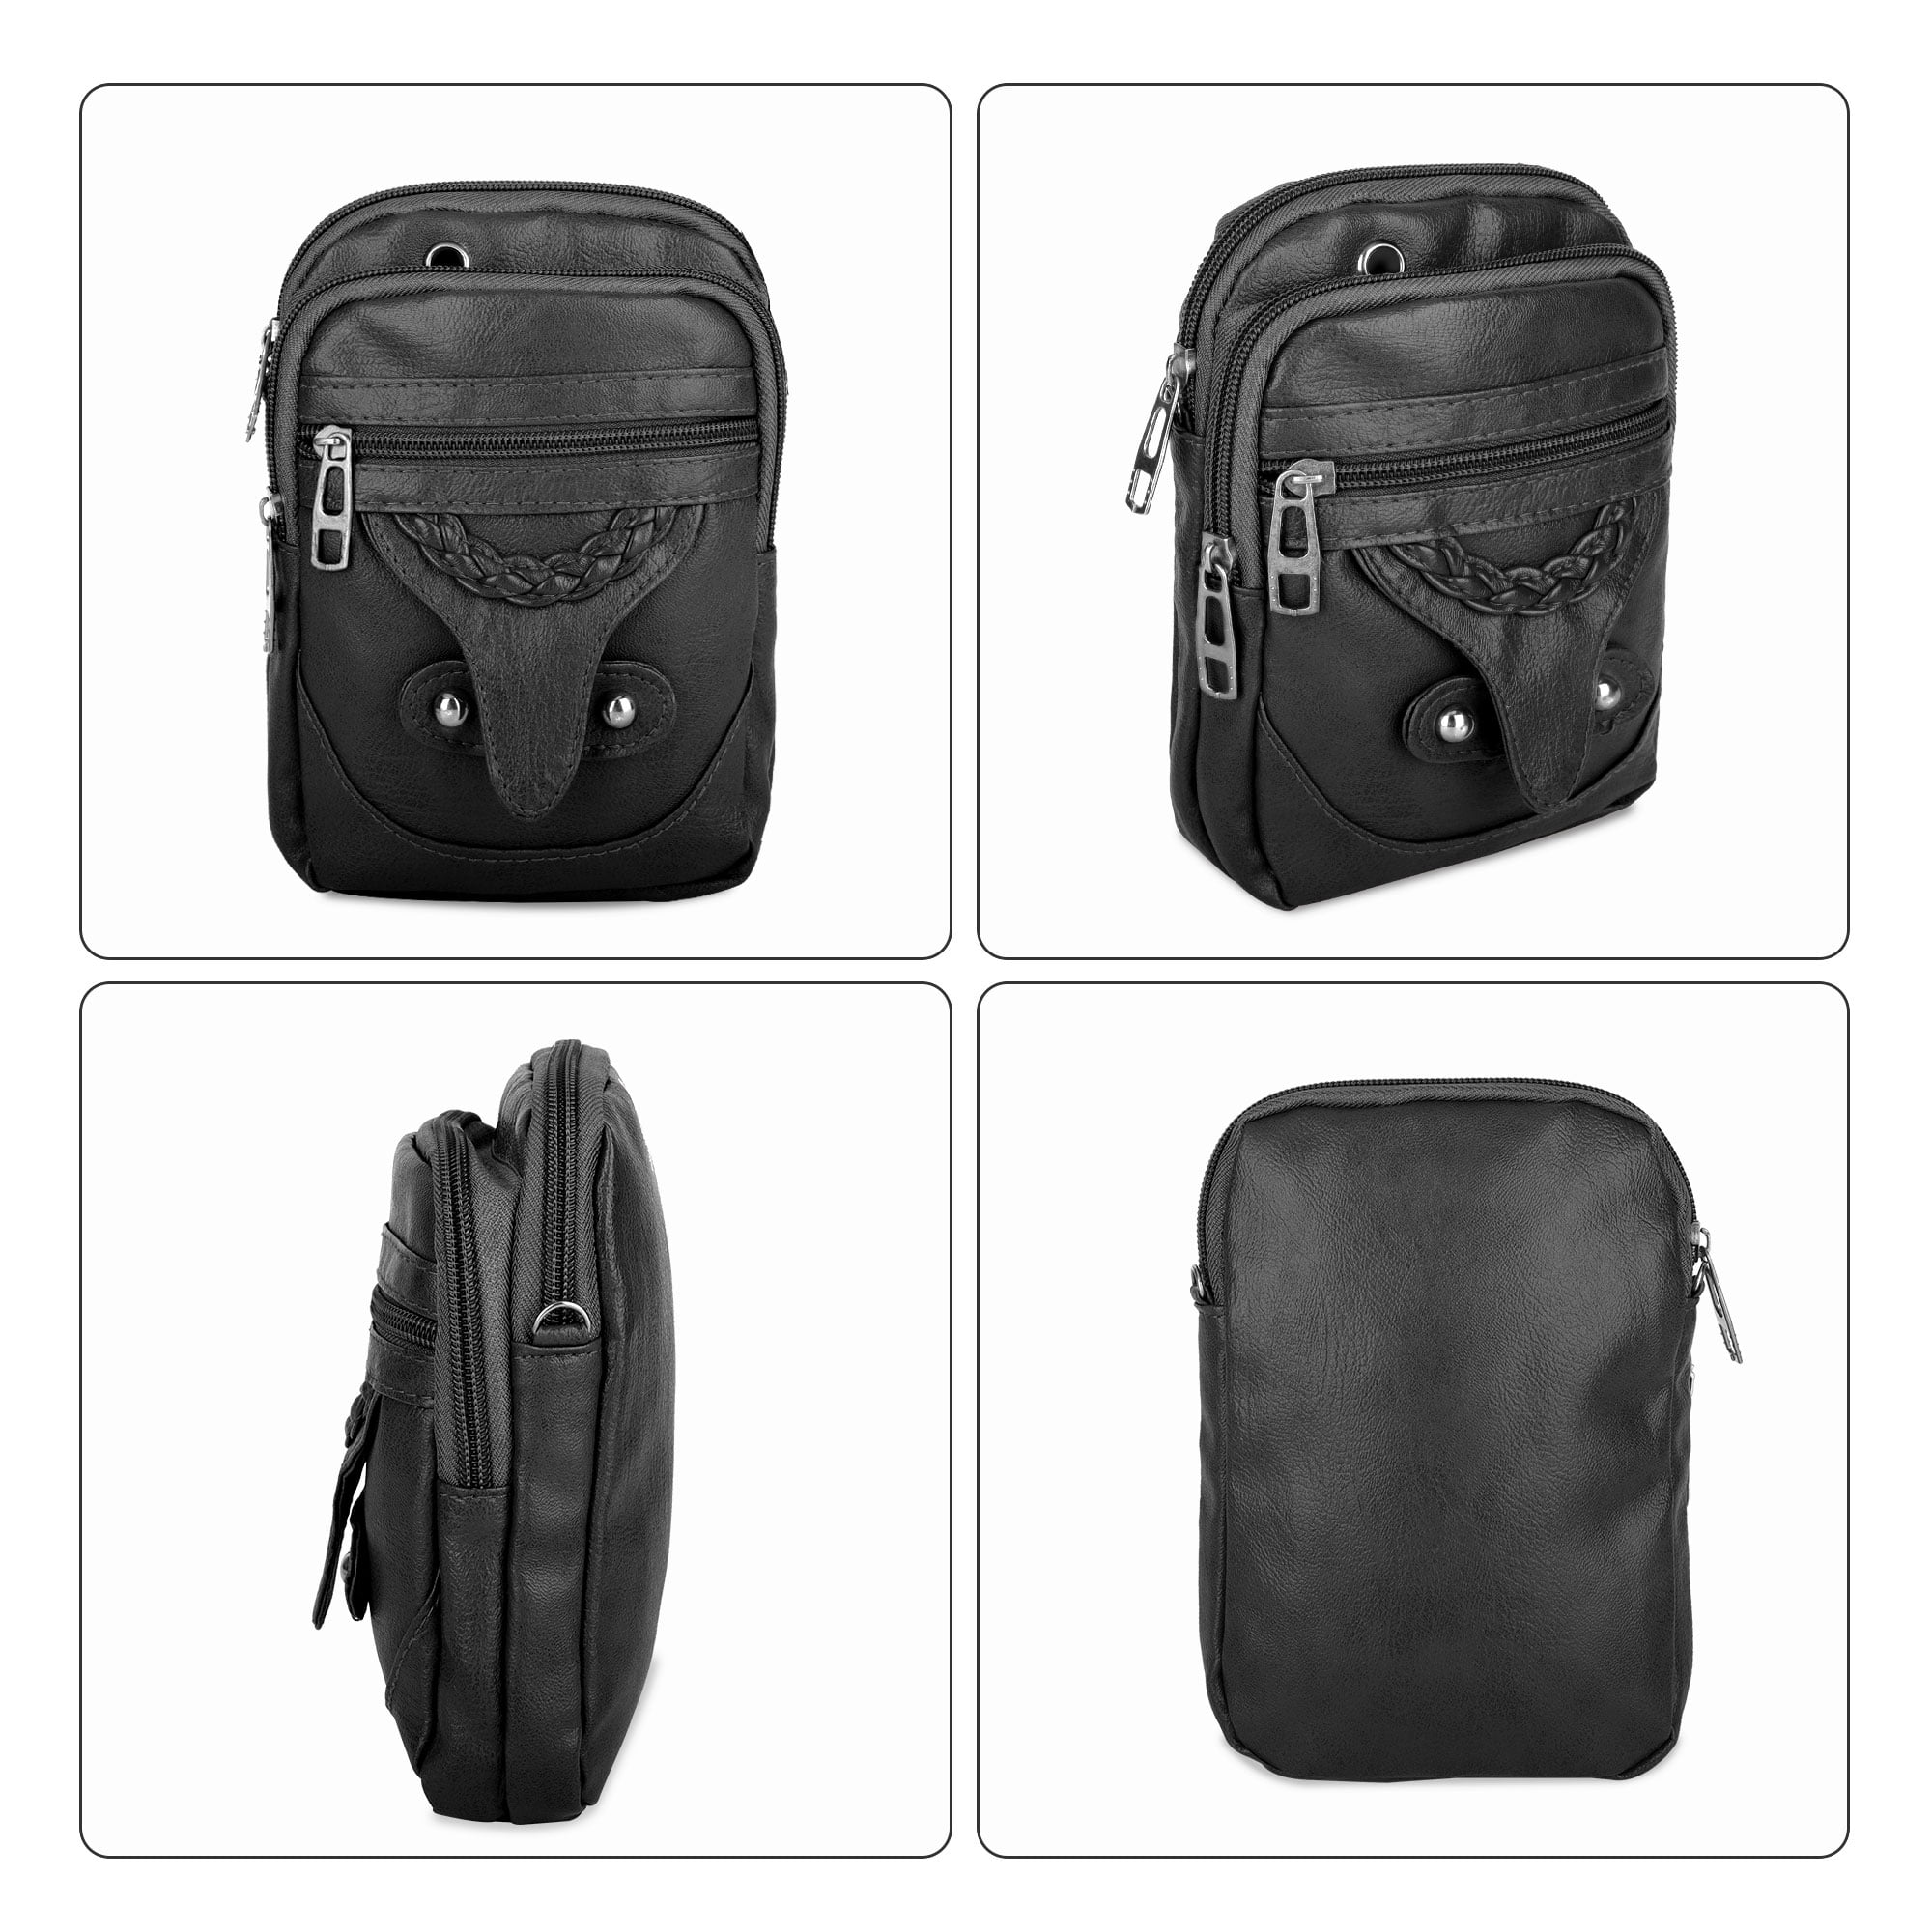 CSONLINEMALL Small Sling Bag Men Arrival Fashion PU Leather Crossbody Bag  Phone Pack